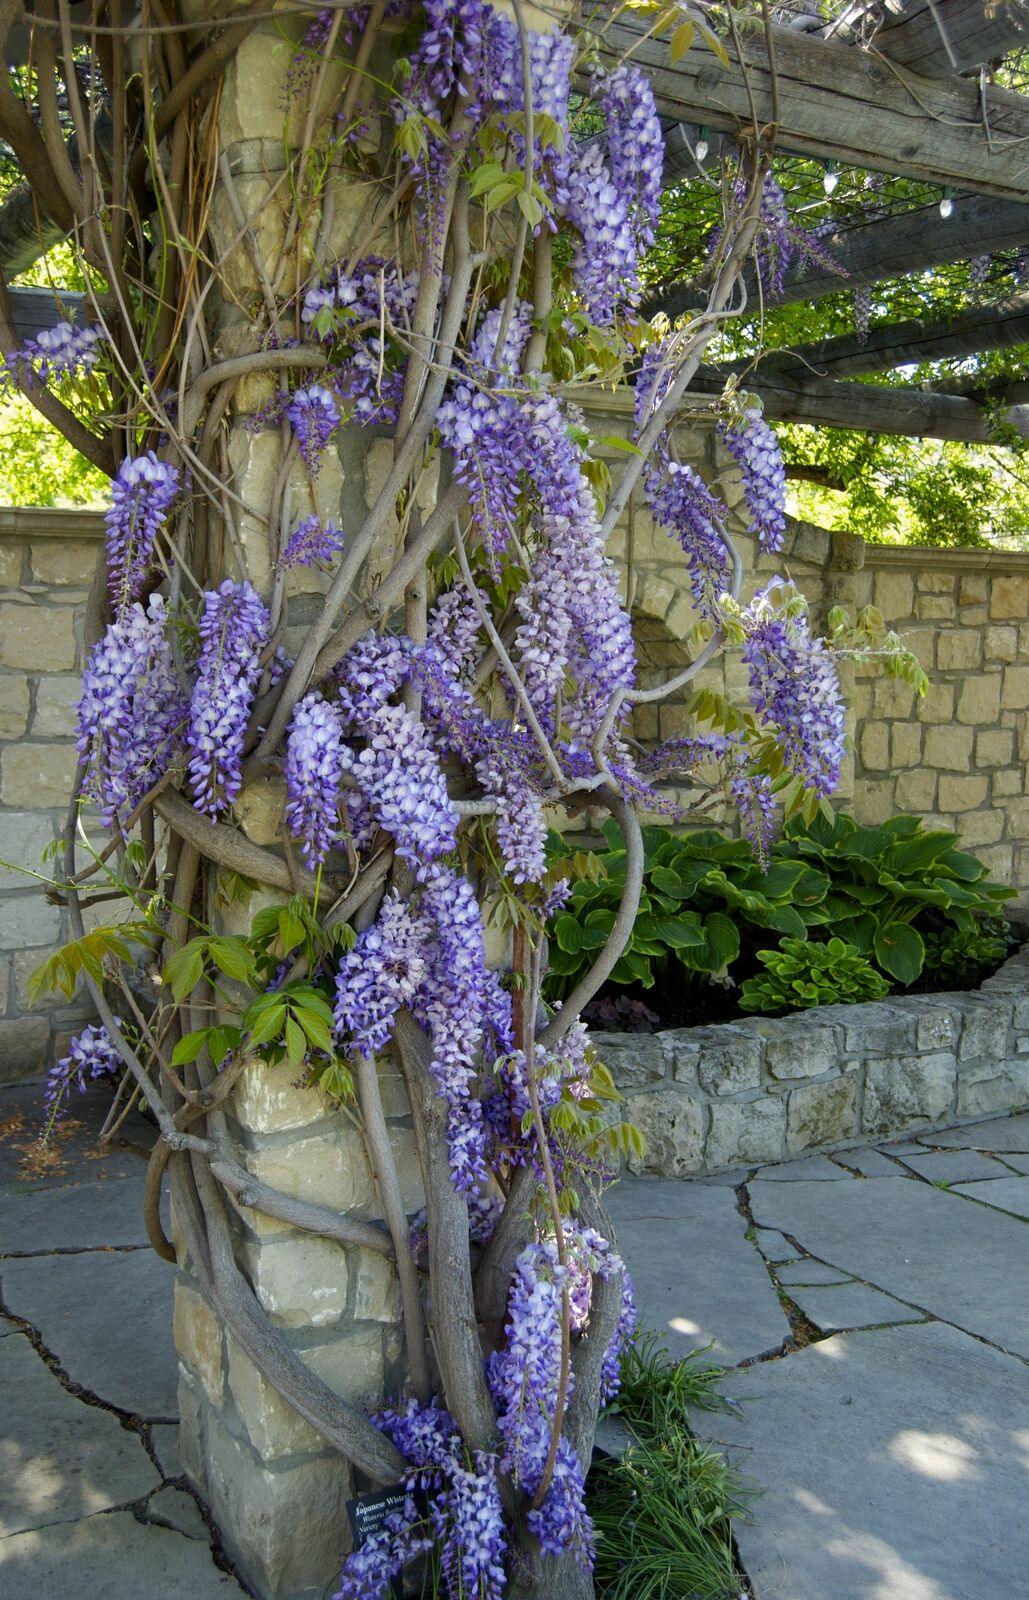 2 Blue Japanese Wisteria Vines - 6-18" Tall - Live Bareroot Plants - Wisteria floribunda - The Nursery Center